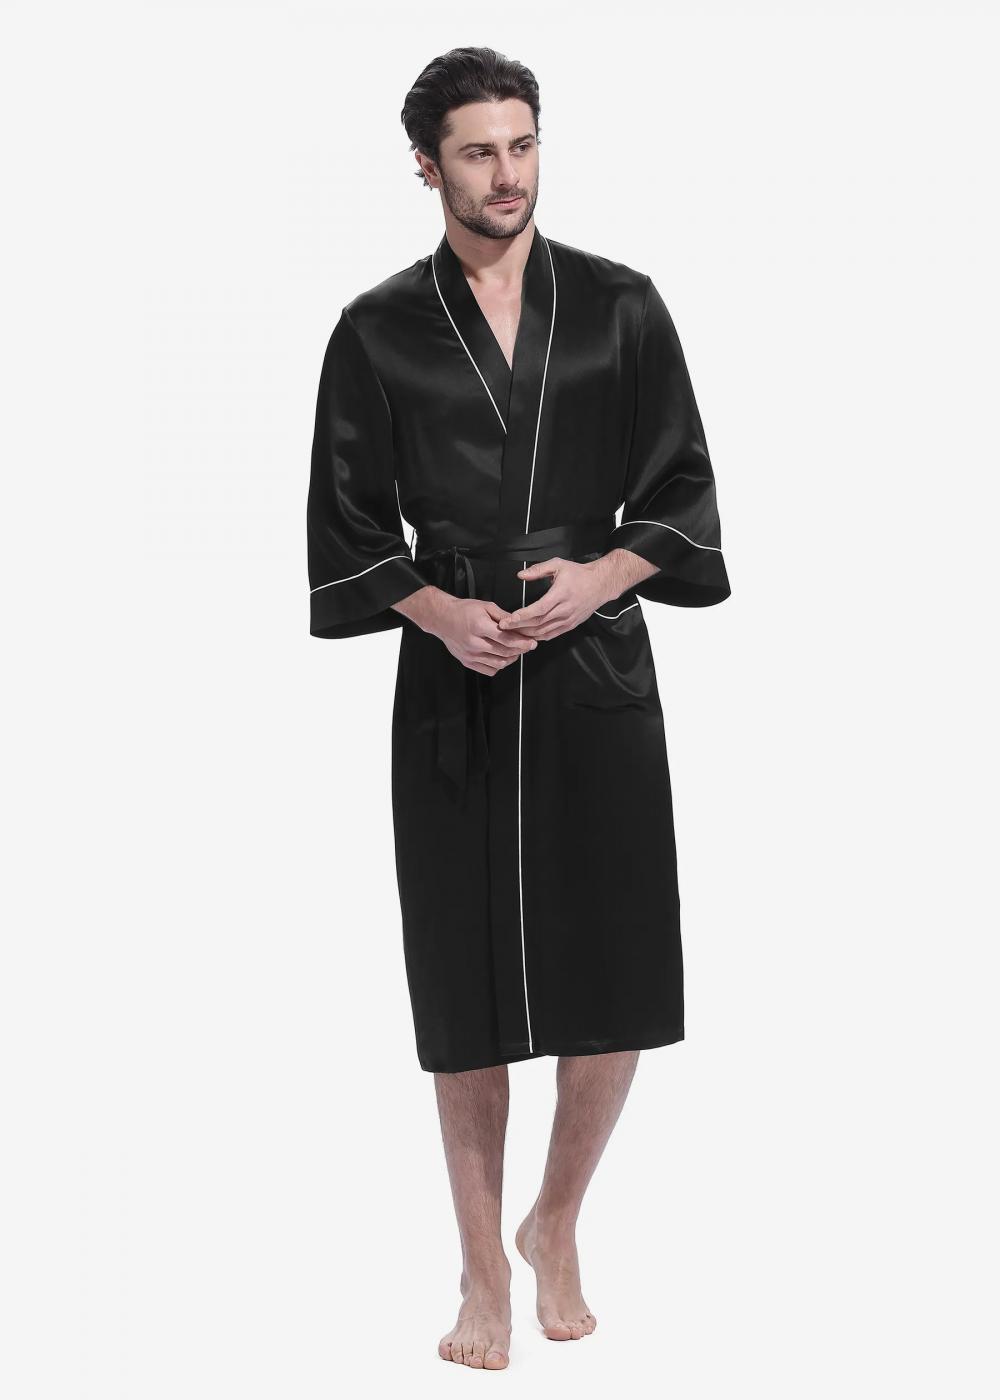 19 Momme Kimono Men's Sleepwear Silk Robe with Piping Pure Color Long Kimono Bathrobes Soft Nightgown